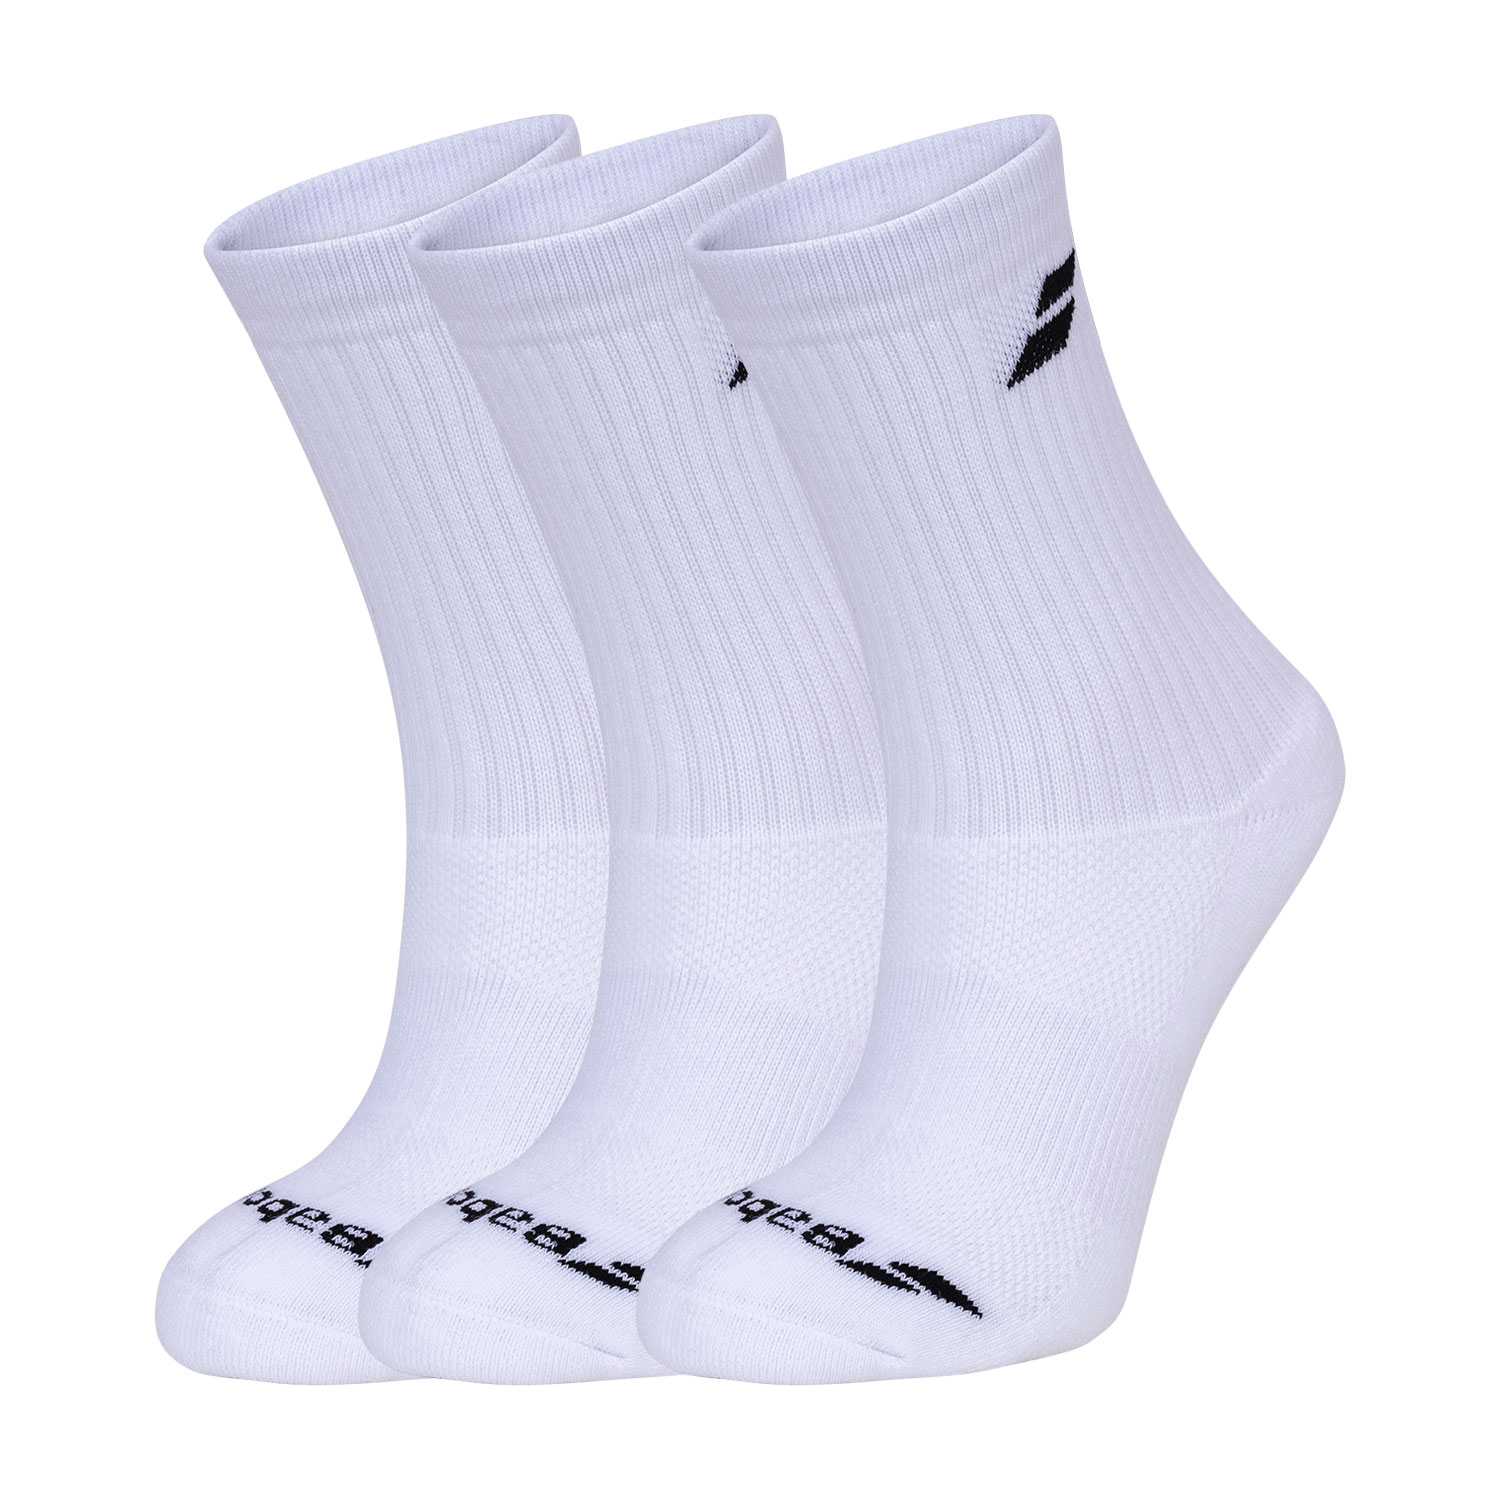 Babolat Logo x 3 Socks - White